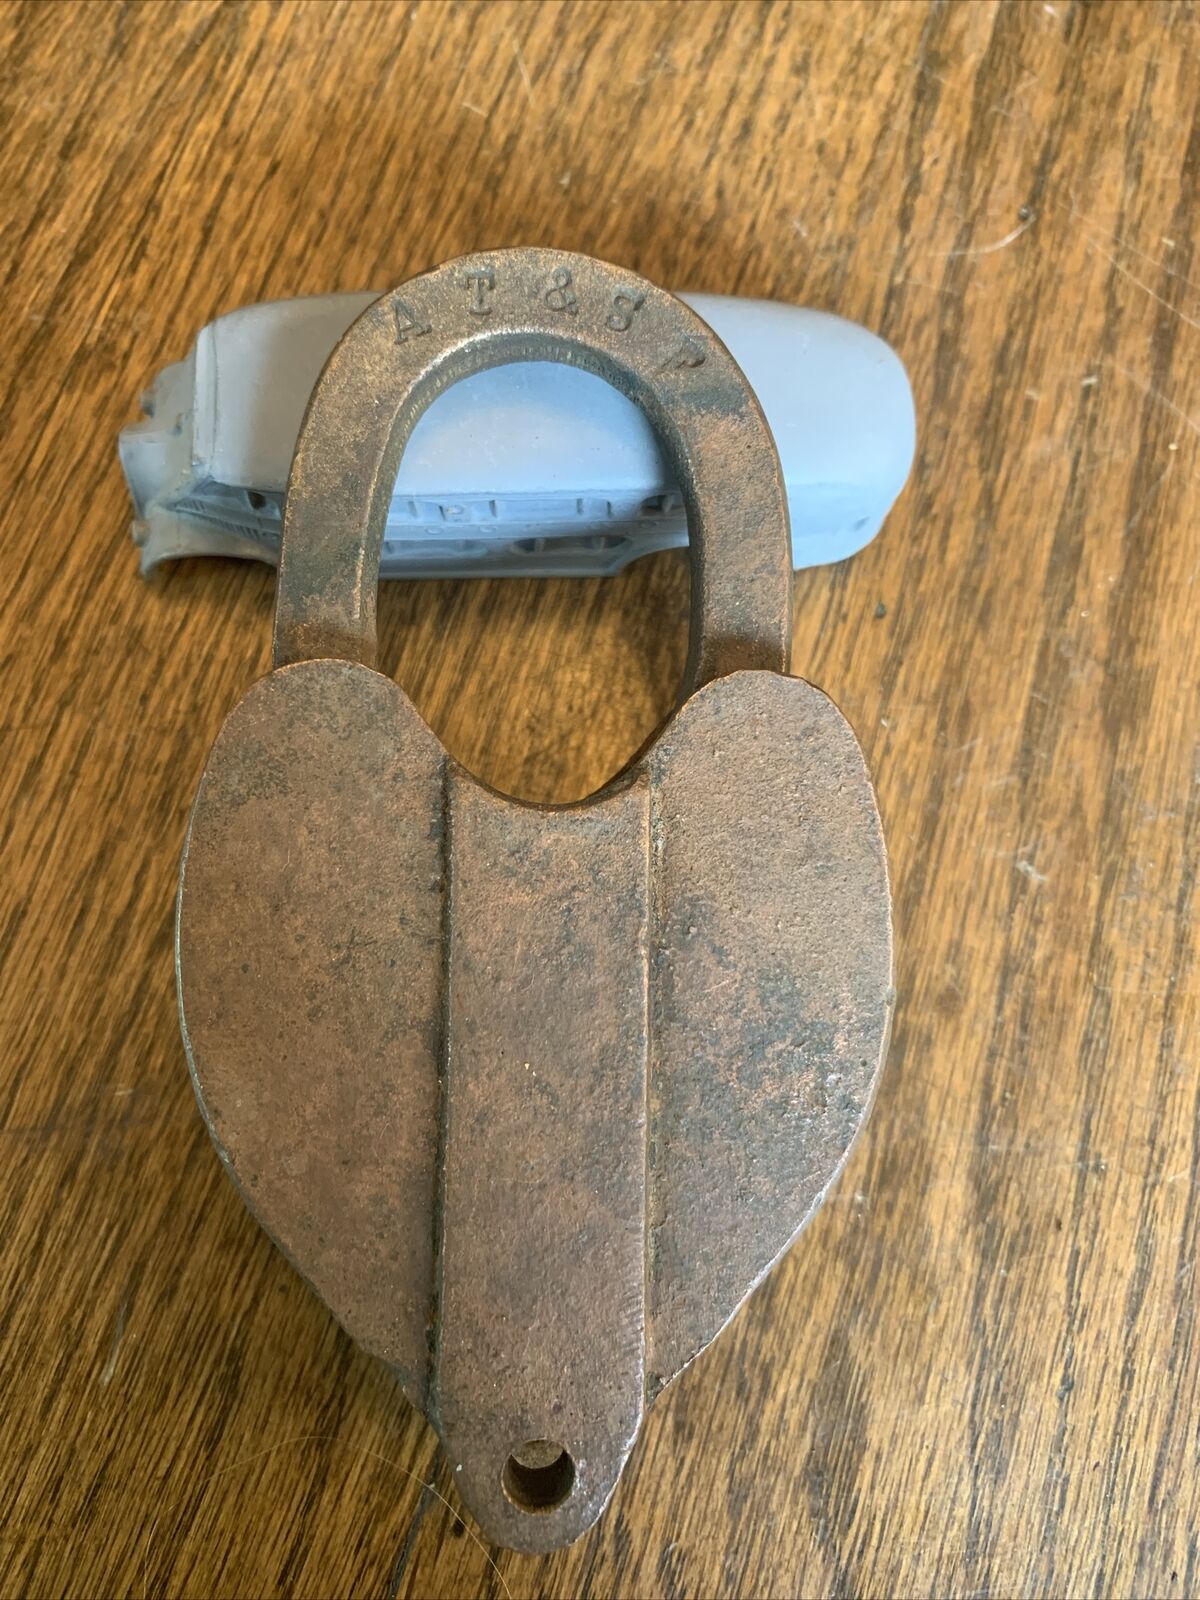 Atchison Topeka & Santa Fe  Railroad Brass Heart Shaped Lock